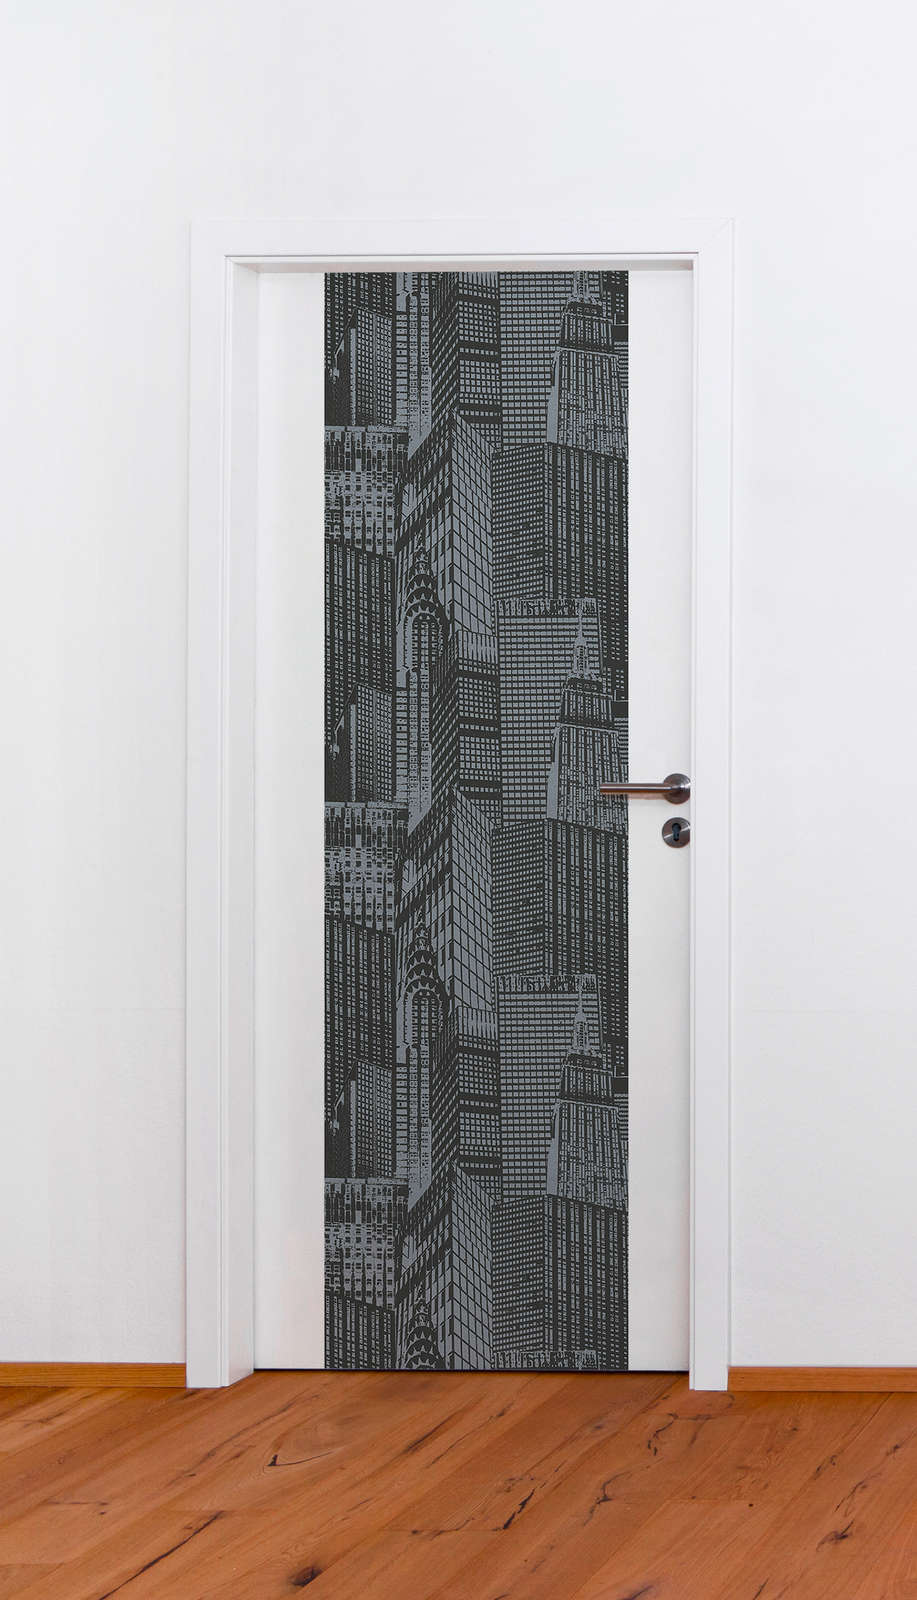             Wallpaper panel New York skyline self-adhesive - grey, black
        